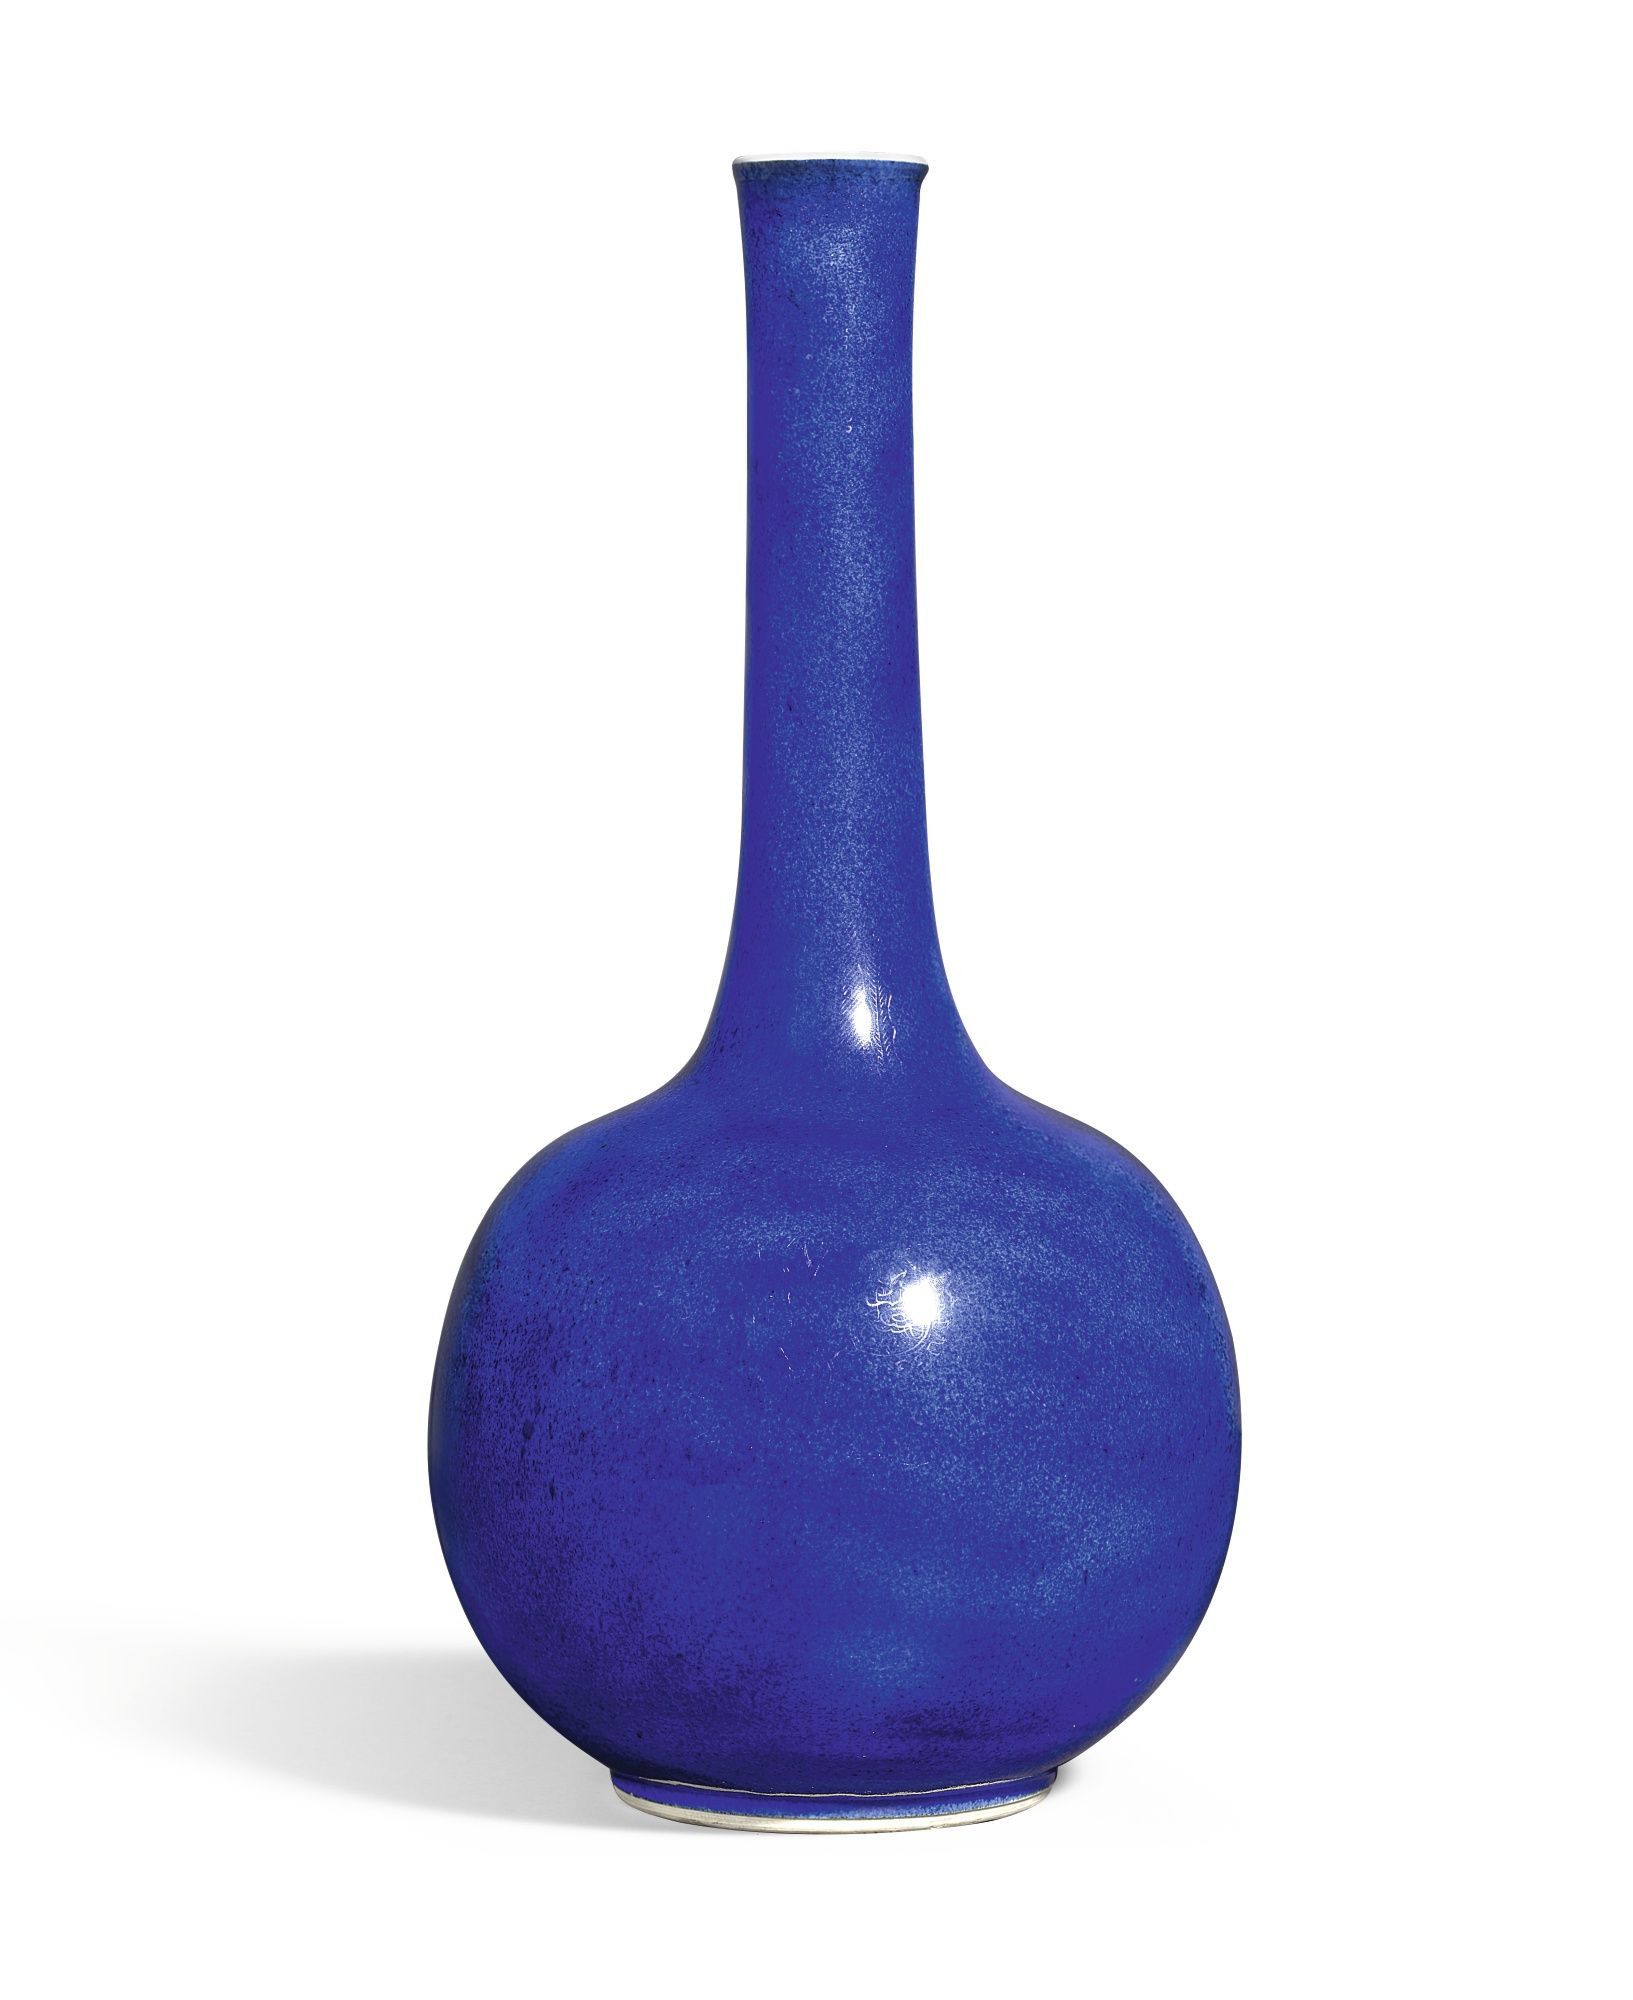 10 Ideal Narrow Neck Vase 2023 free download narrow neck vase of a powder blue glazed bottle vase qing dynasty kangxi period regarding a powder blue glazed bottle vase qing dynasty kangxi period 1662 1722